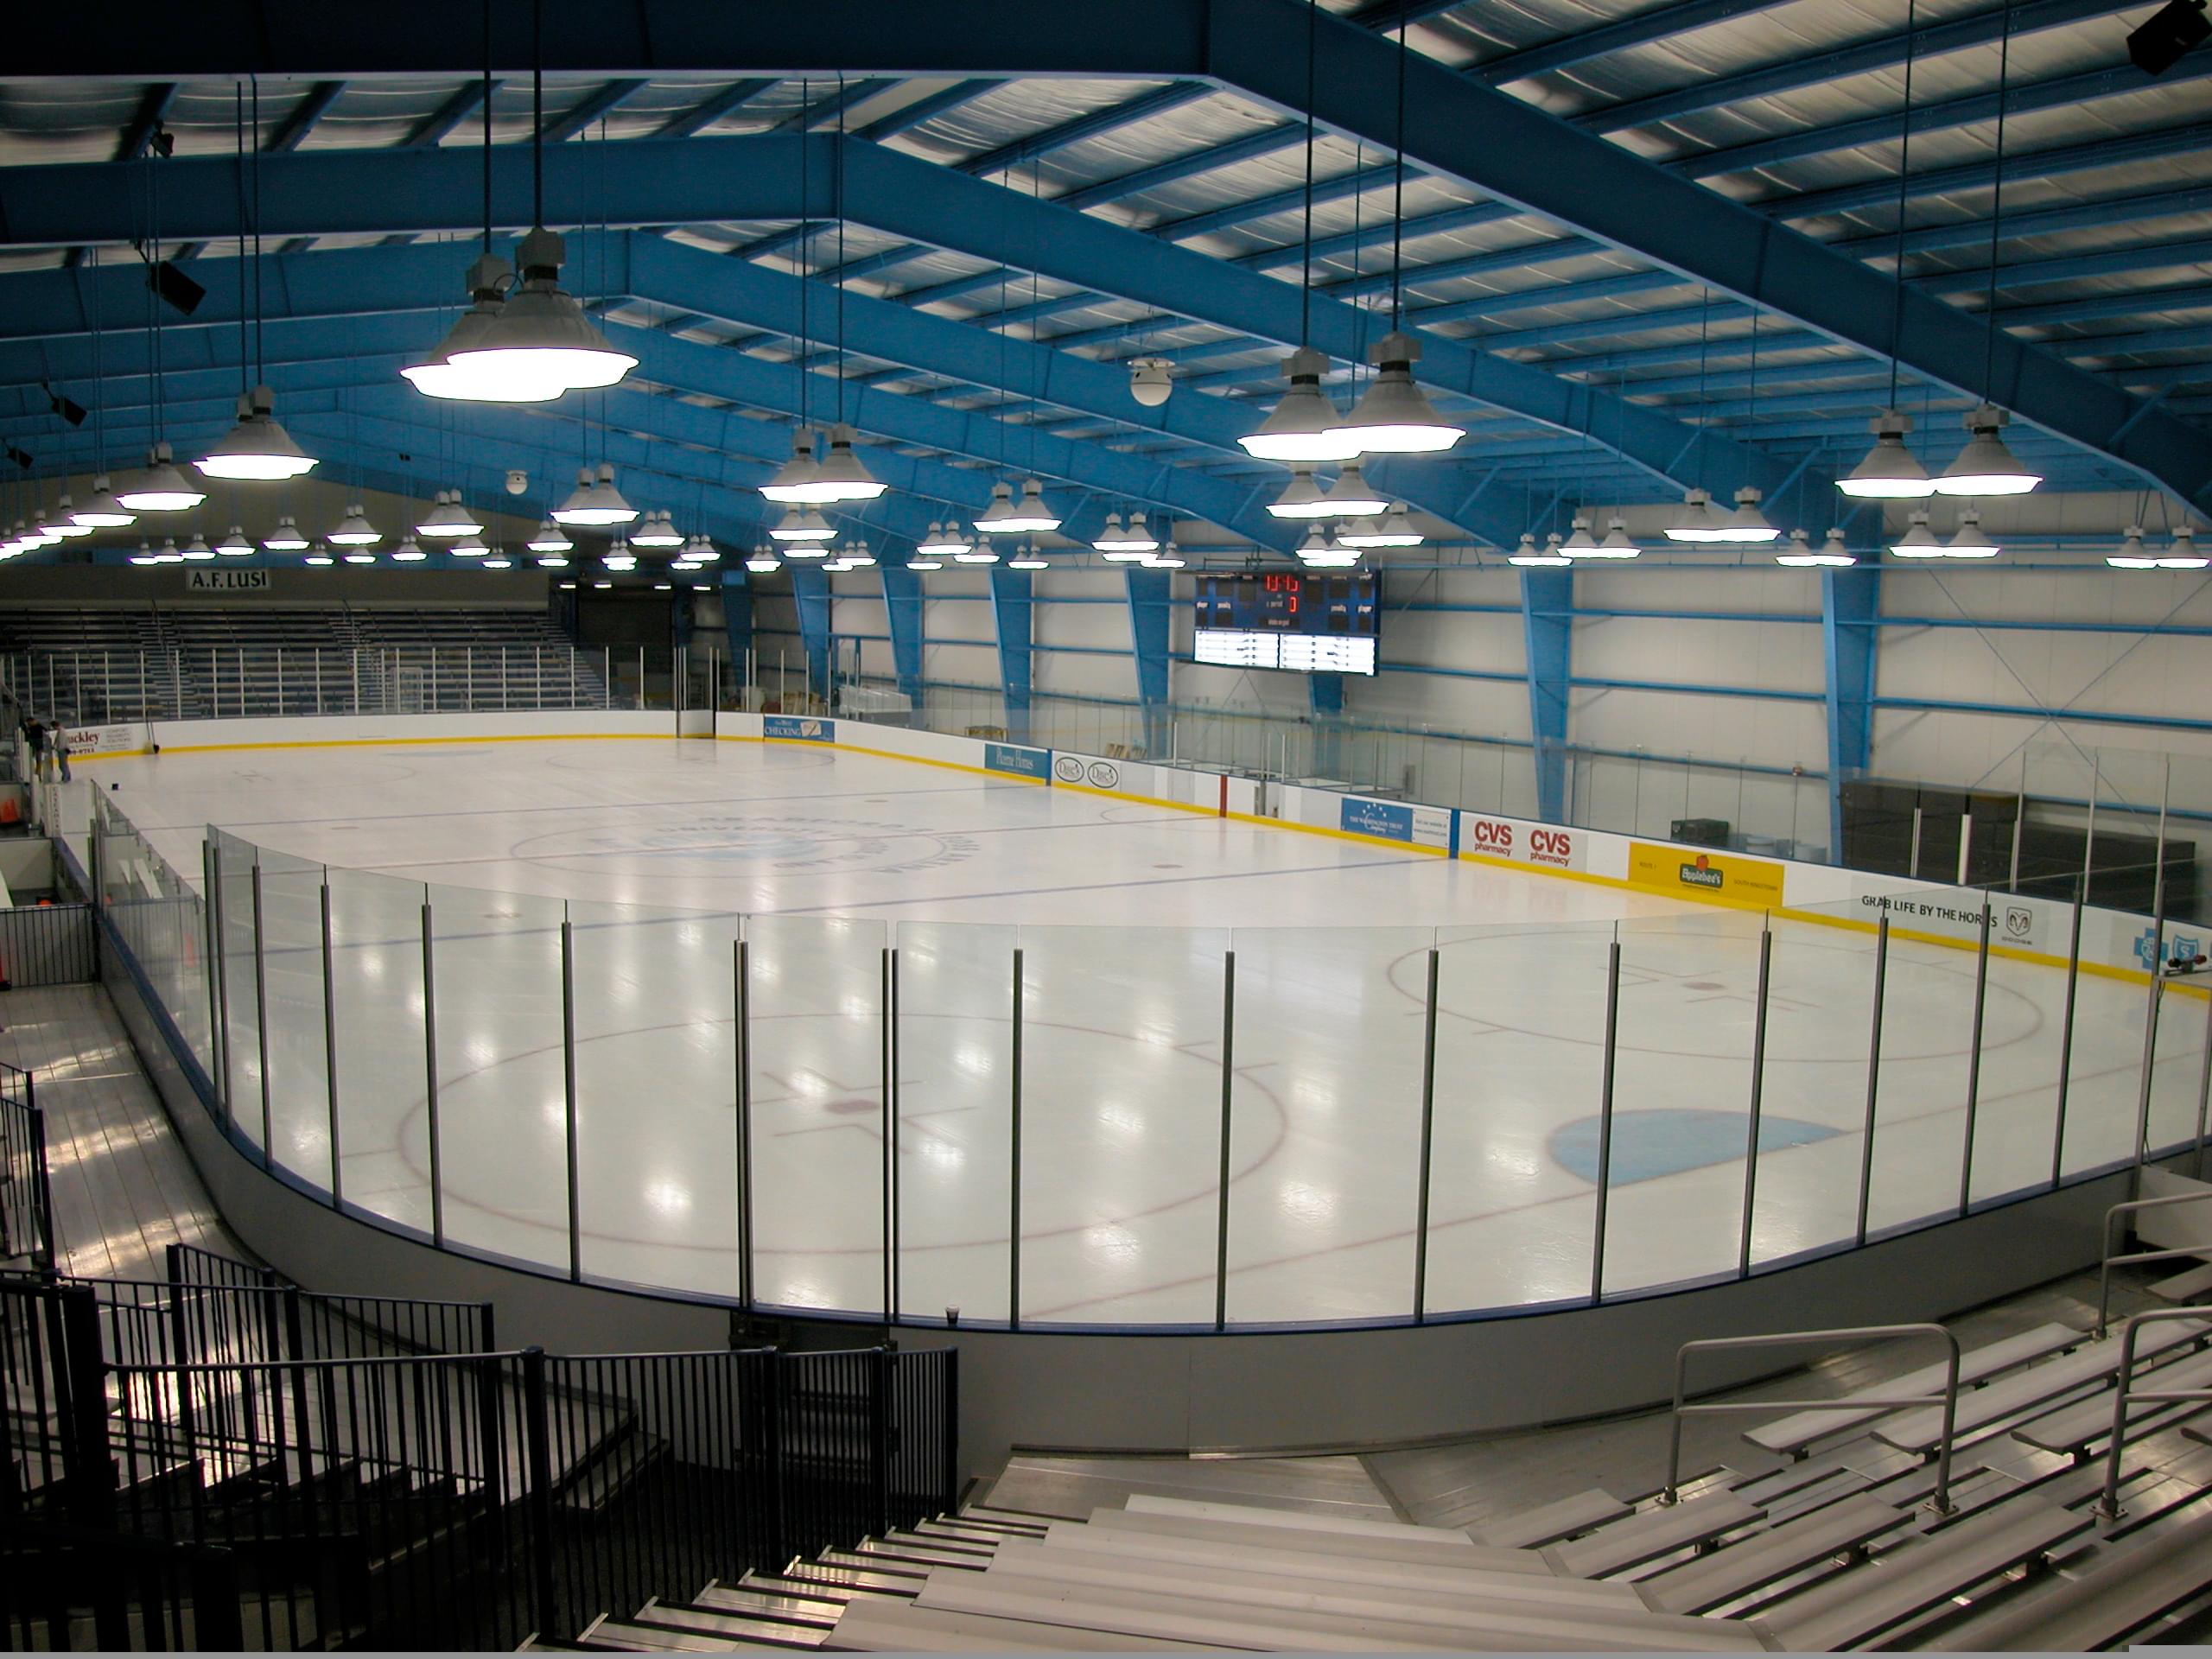 Bradford Ice Rink Overview